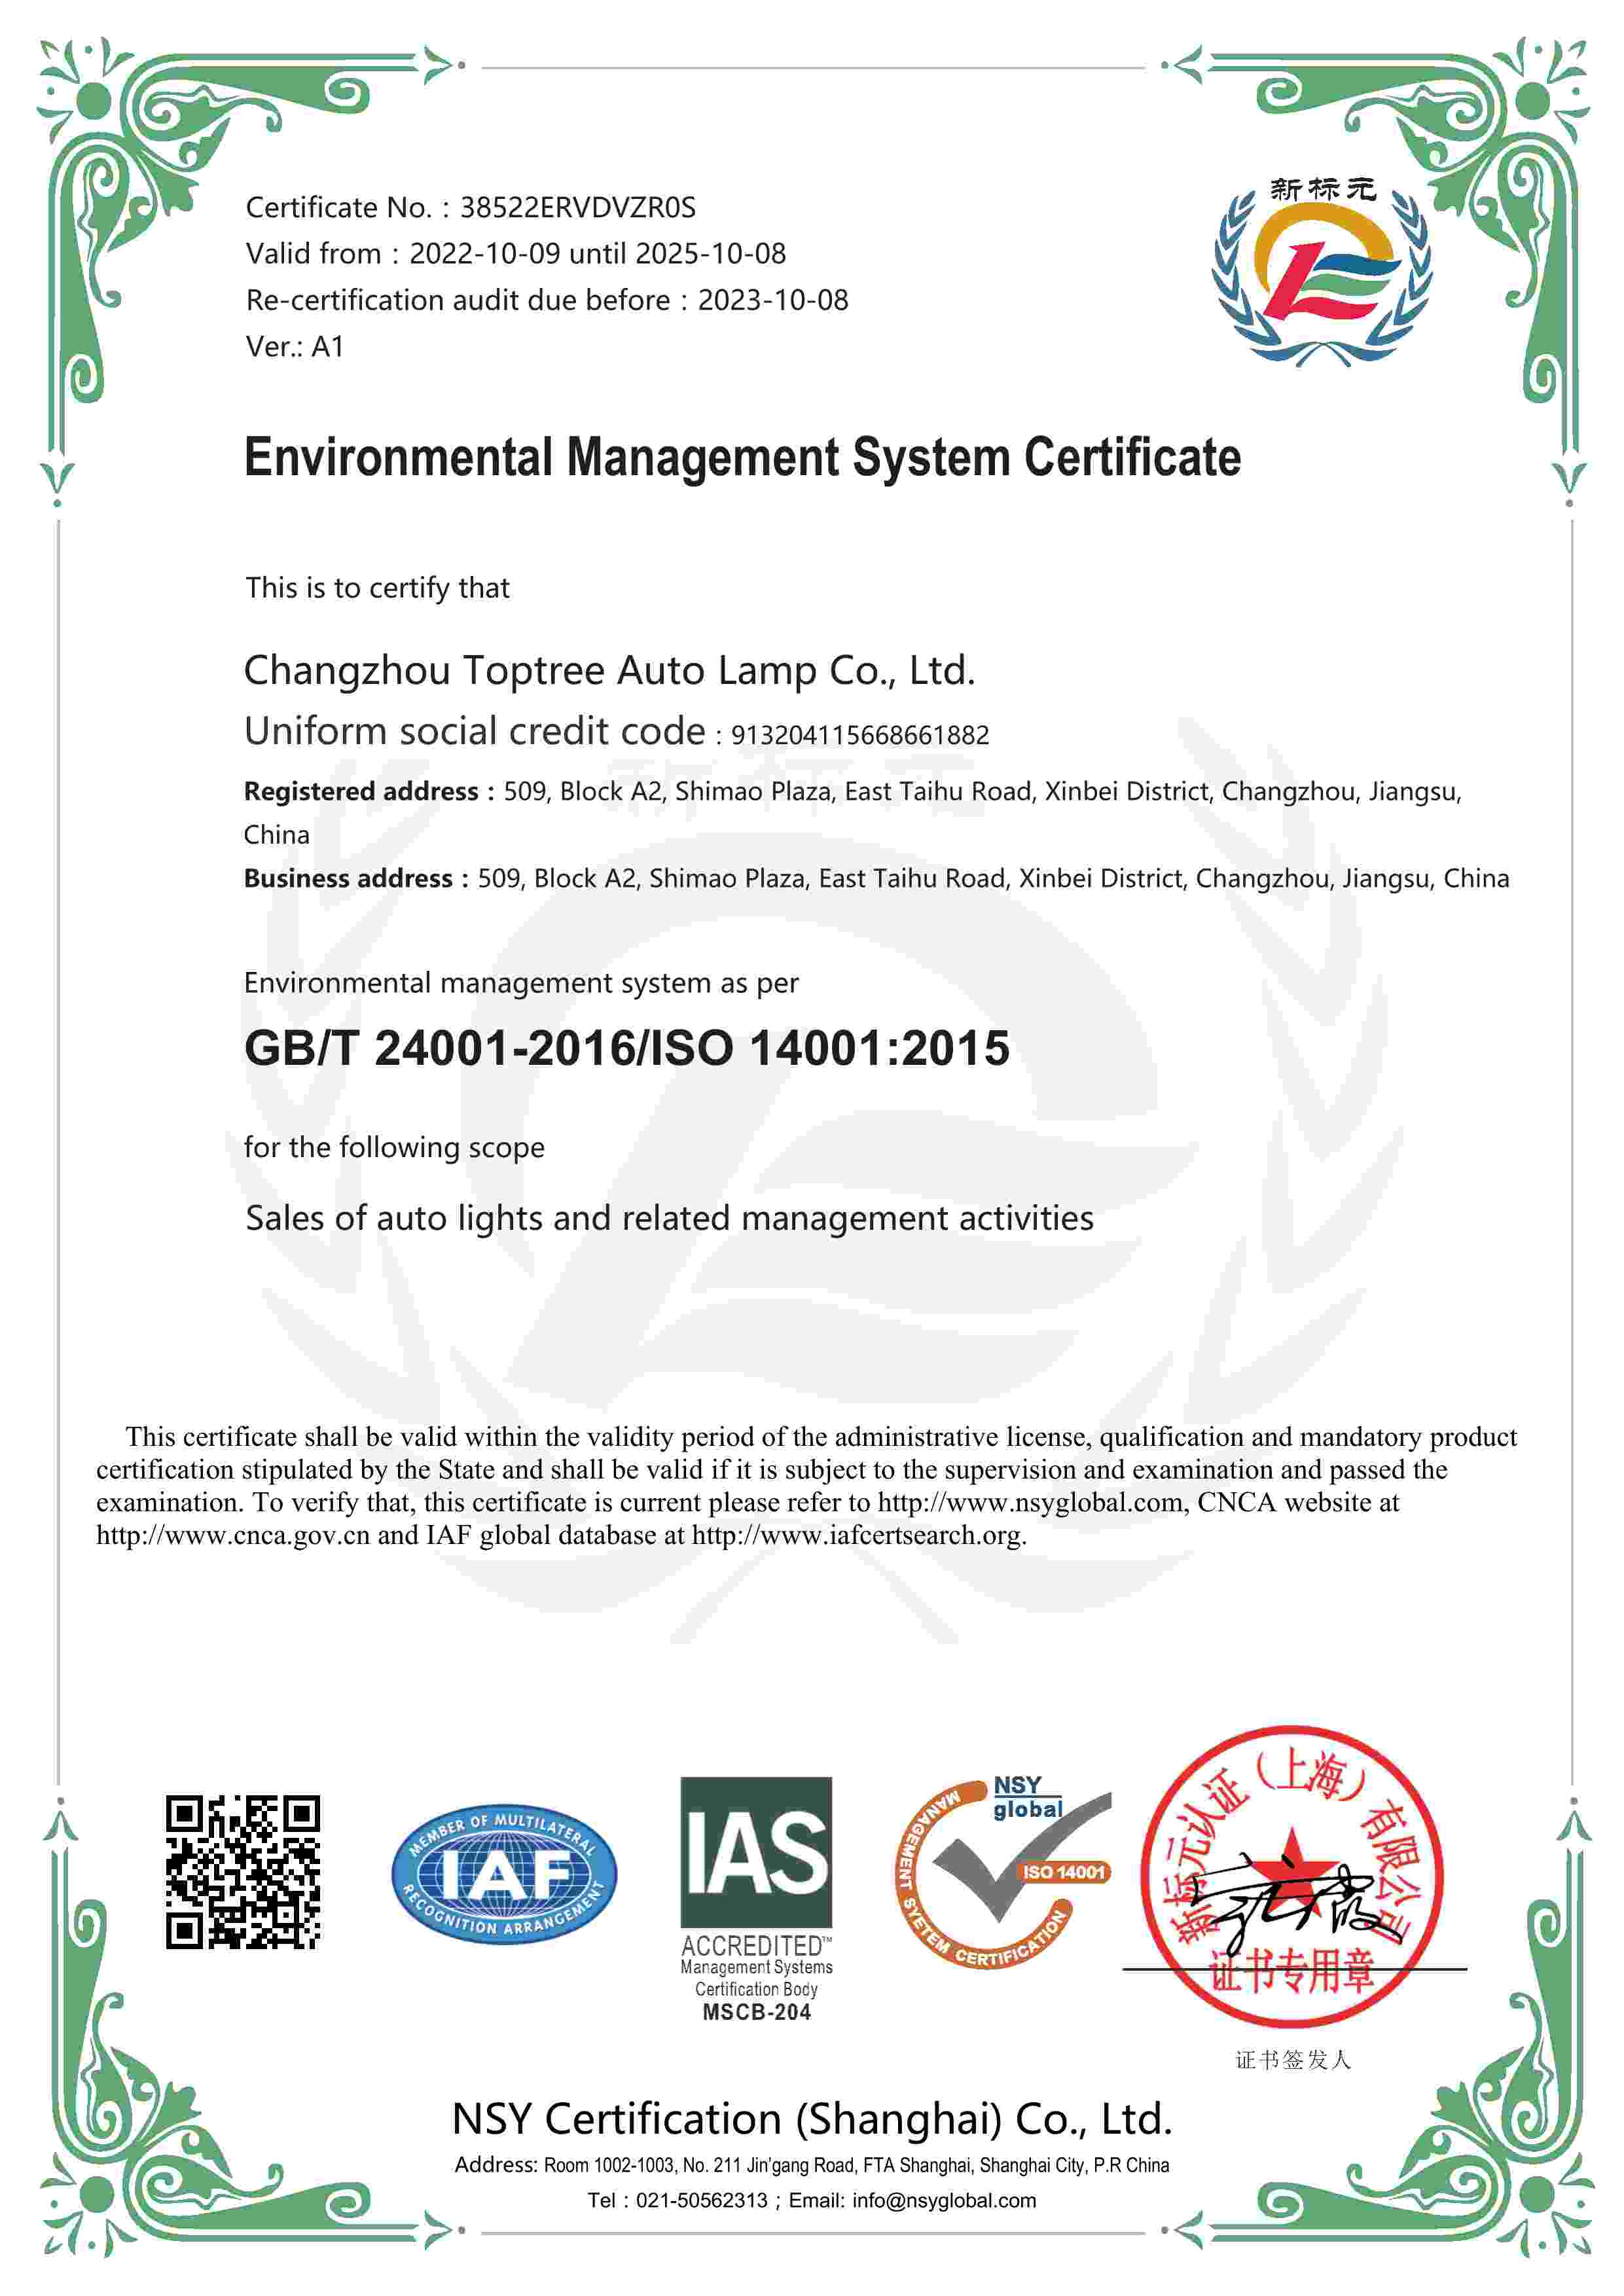 TOPTREE: Won Environmental Management System Certificate